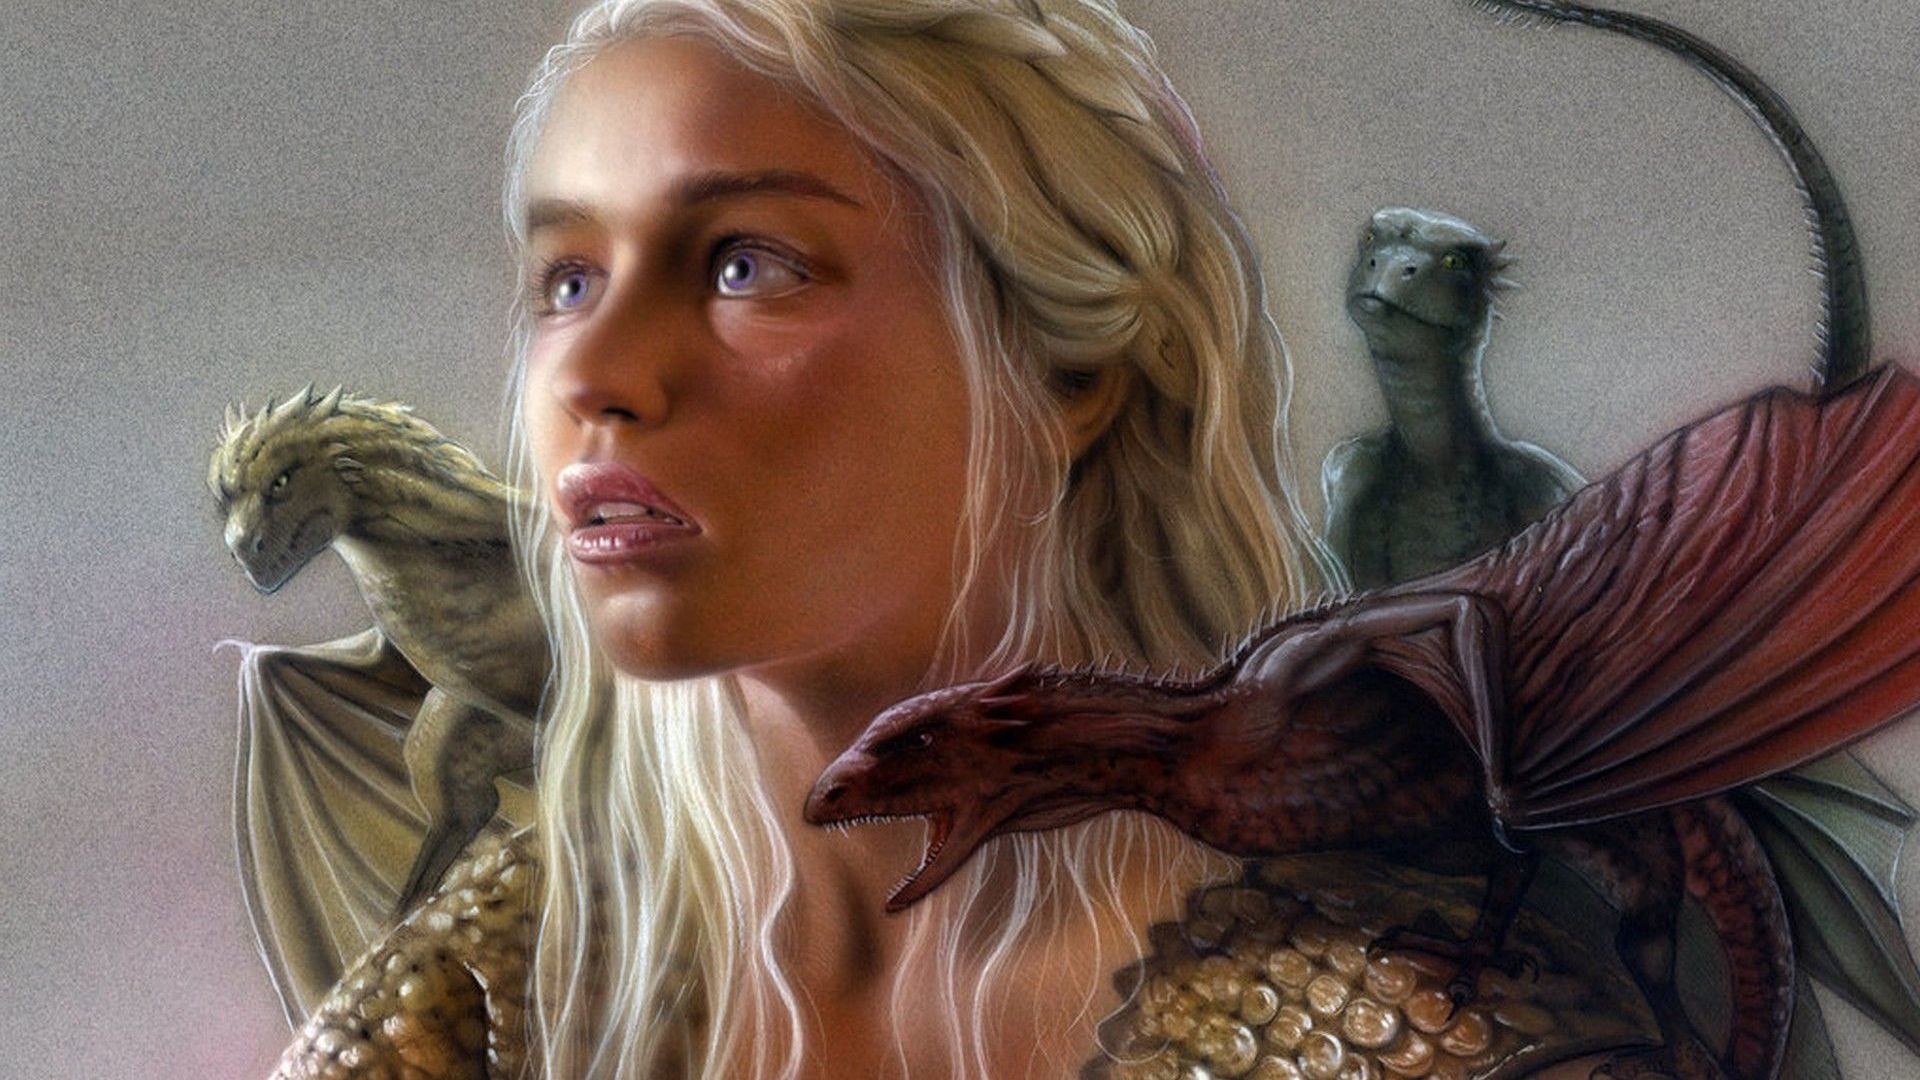 1920x1080 Daenerys Targaryen - Game of Thrones HD Wallpaper  Daenerys ...